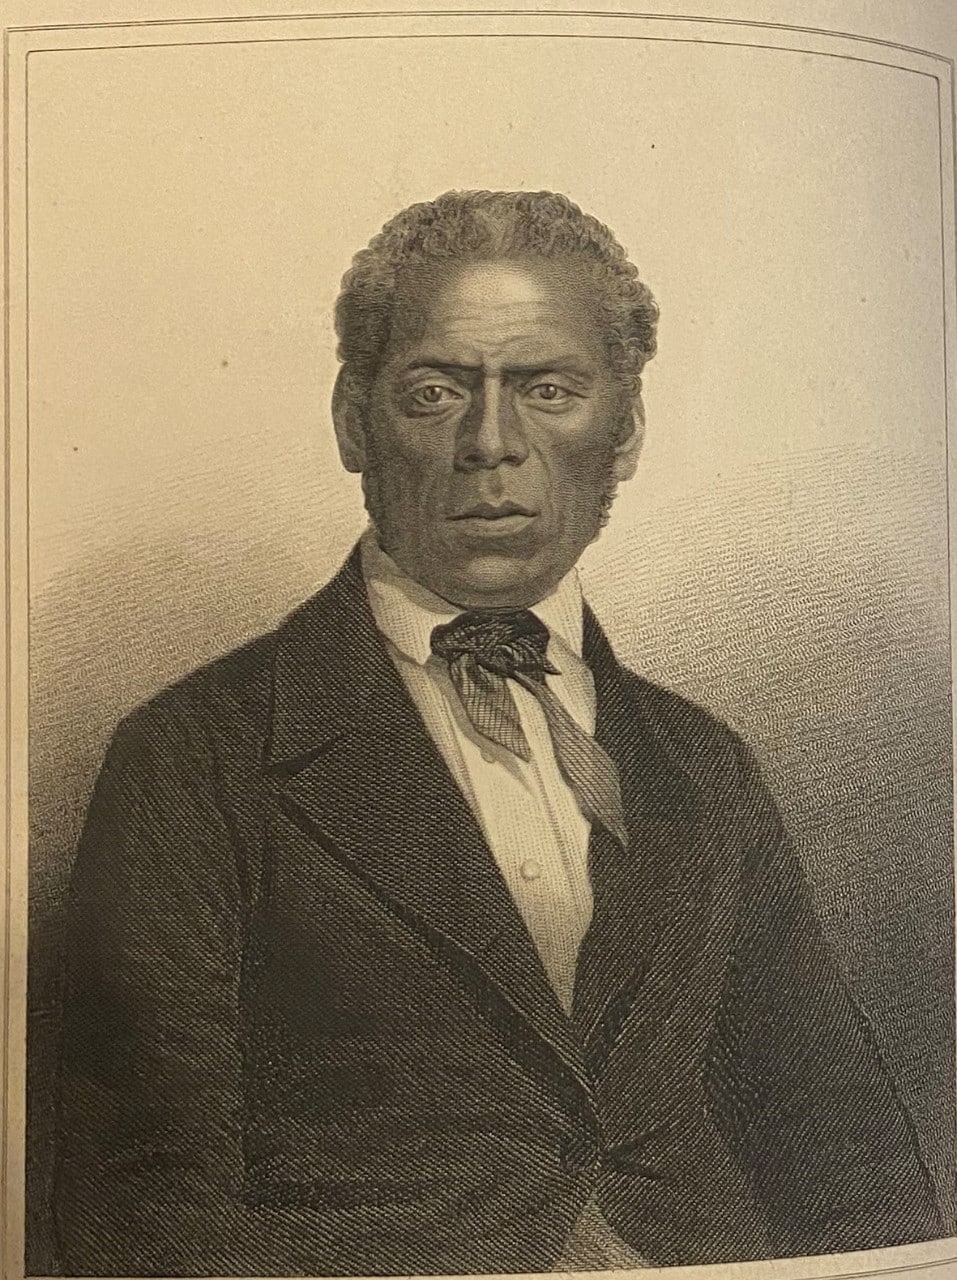 Sepia toned portrait of King George Tupou the first of Tonga